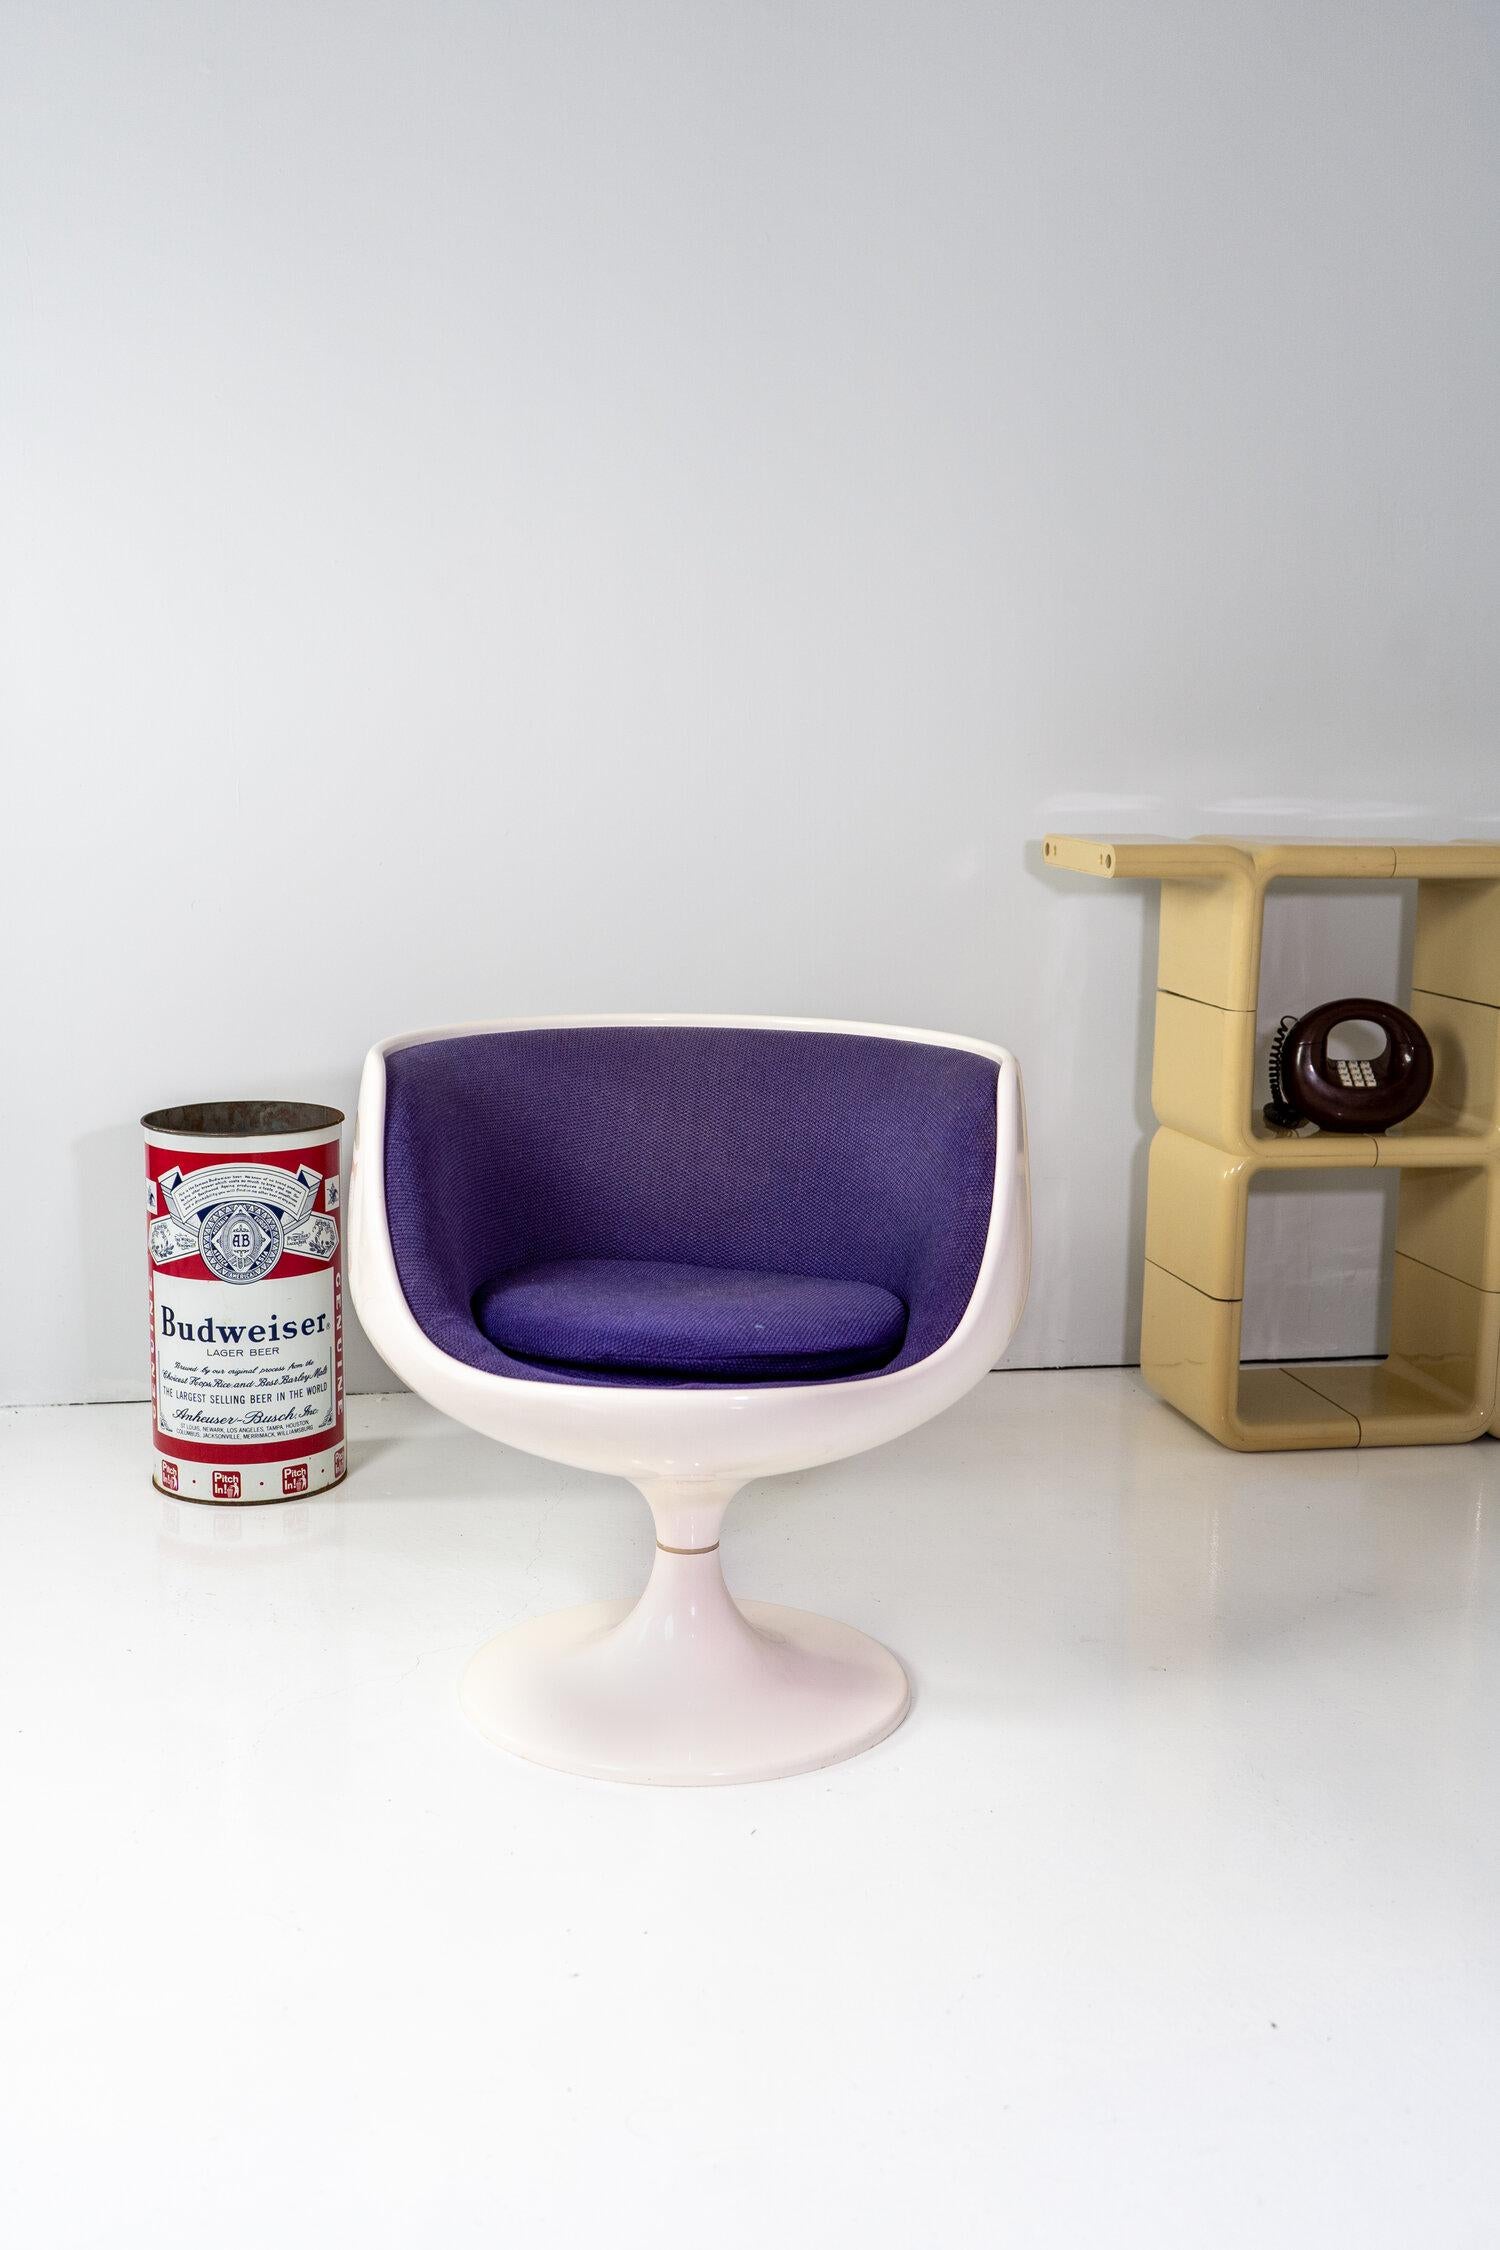 Fiberglass shell and base with original purple upholstery.